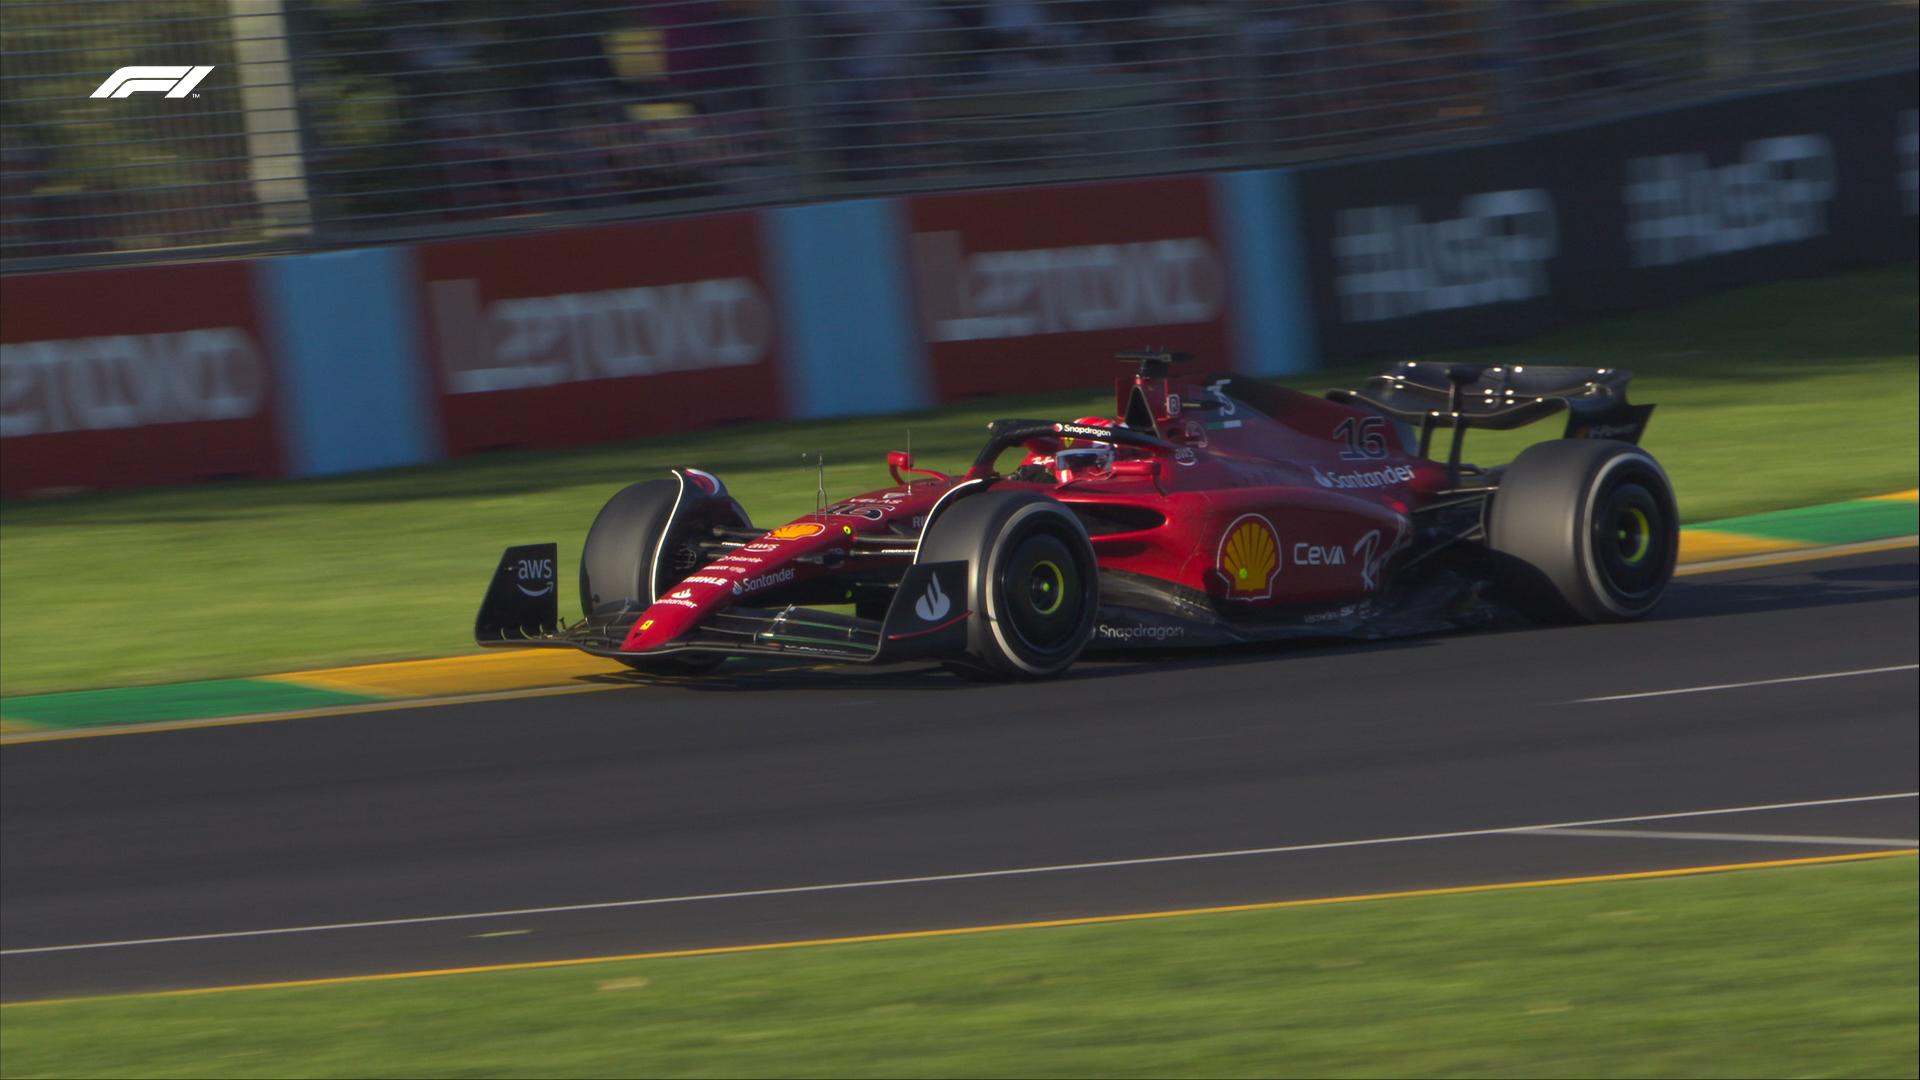 Leclerc rumbo al triunfo en Australia. Foto: F1TV